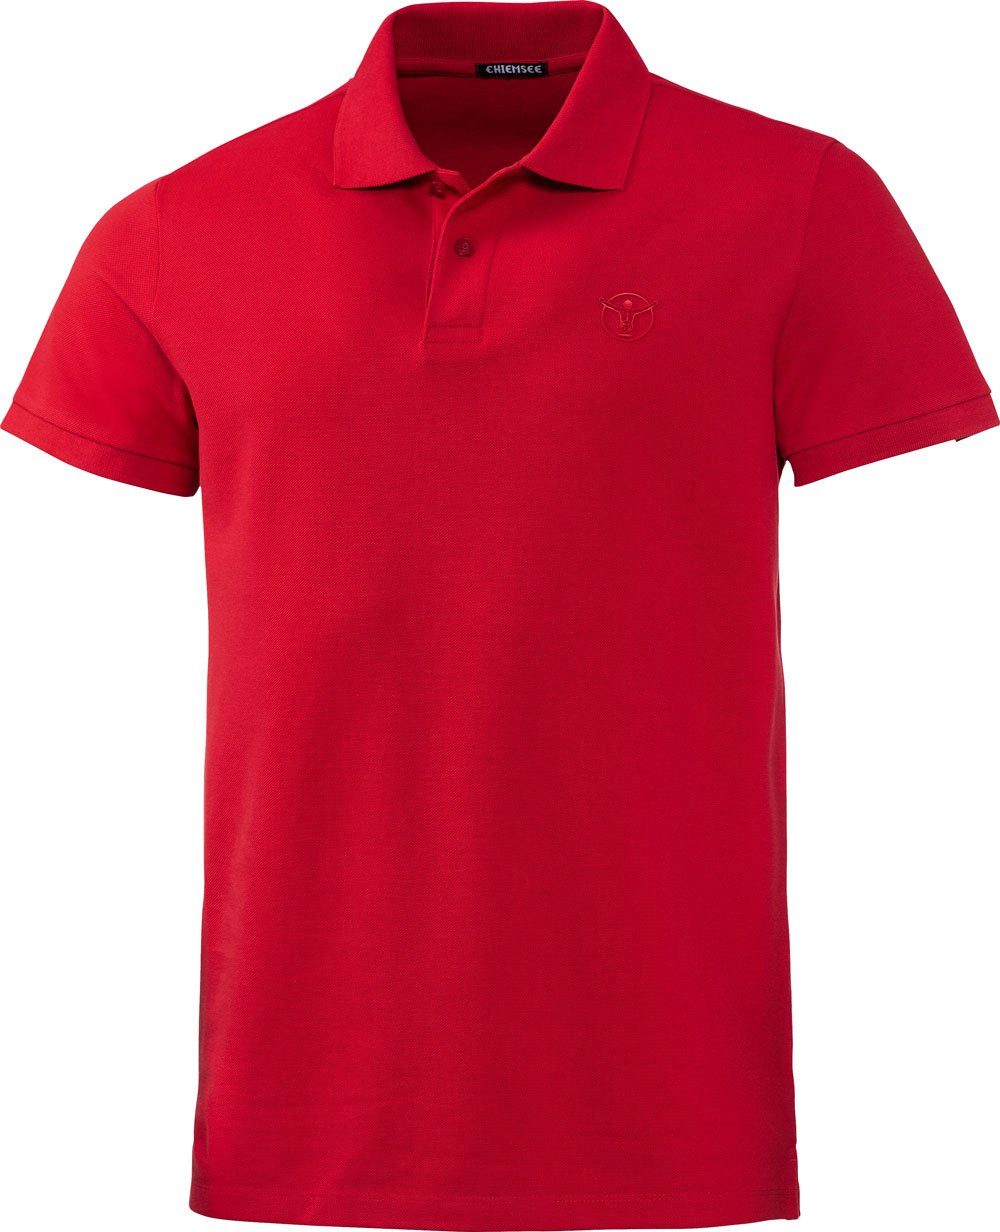 Baumwoll-Piqué rot reinem Poloshirt aus Chiemsee